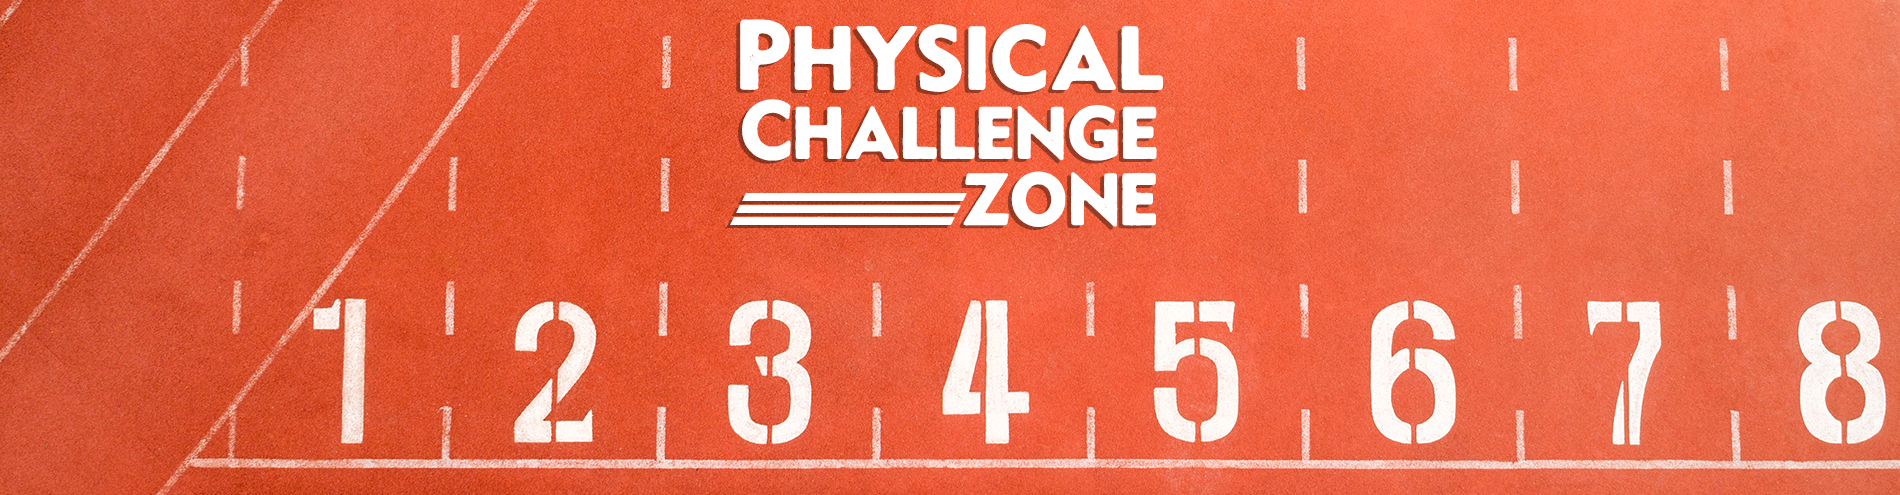 Physical Challenge Zone Header